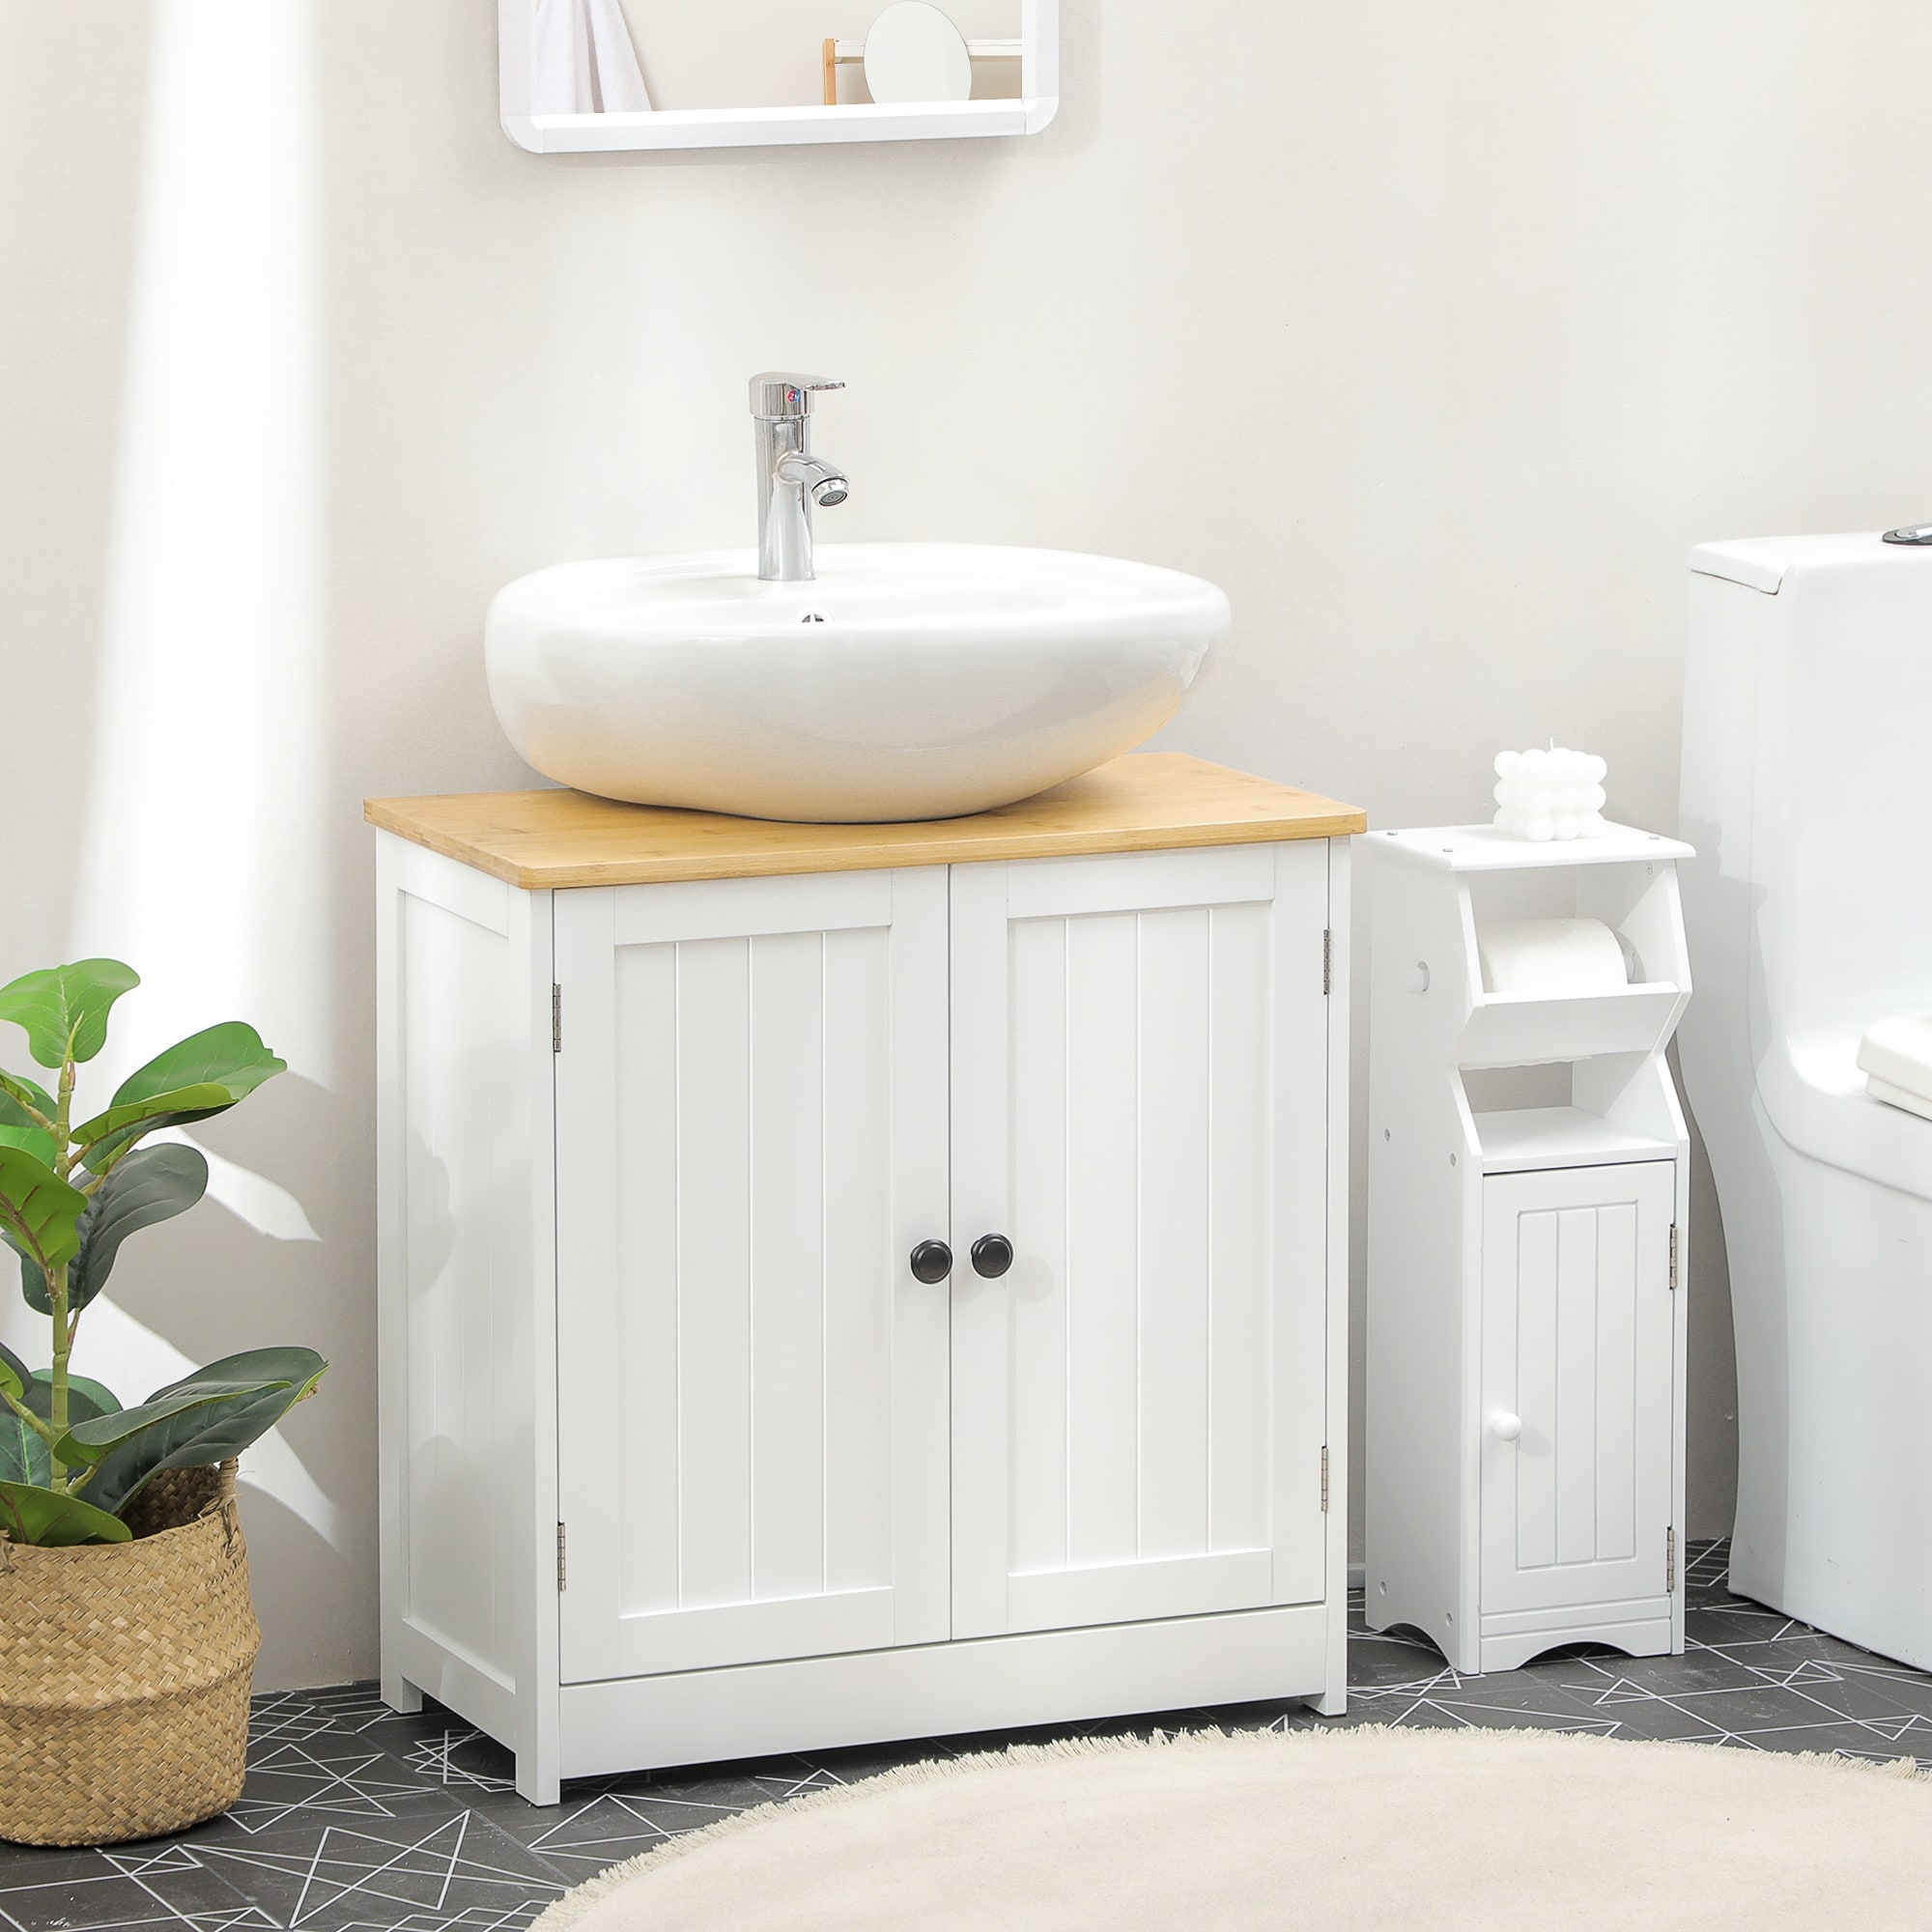 https://ak1.ostkcdn.com/images/products/is/images/direct/7d71cd8835258c18f2bfd1867034ee732d58662b/kleankin-Modern-Bathroom-Sink-Cabinet%2C-Pedestal-Sink-Storage-Cabinet-with-Double-Doors-and-Adjustable-Shelf%2C-Bathroom-Vanity.jpg